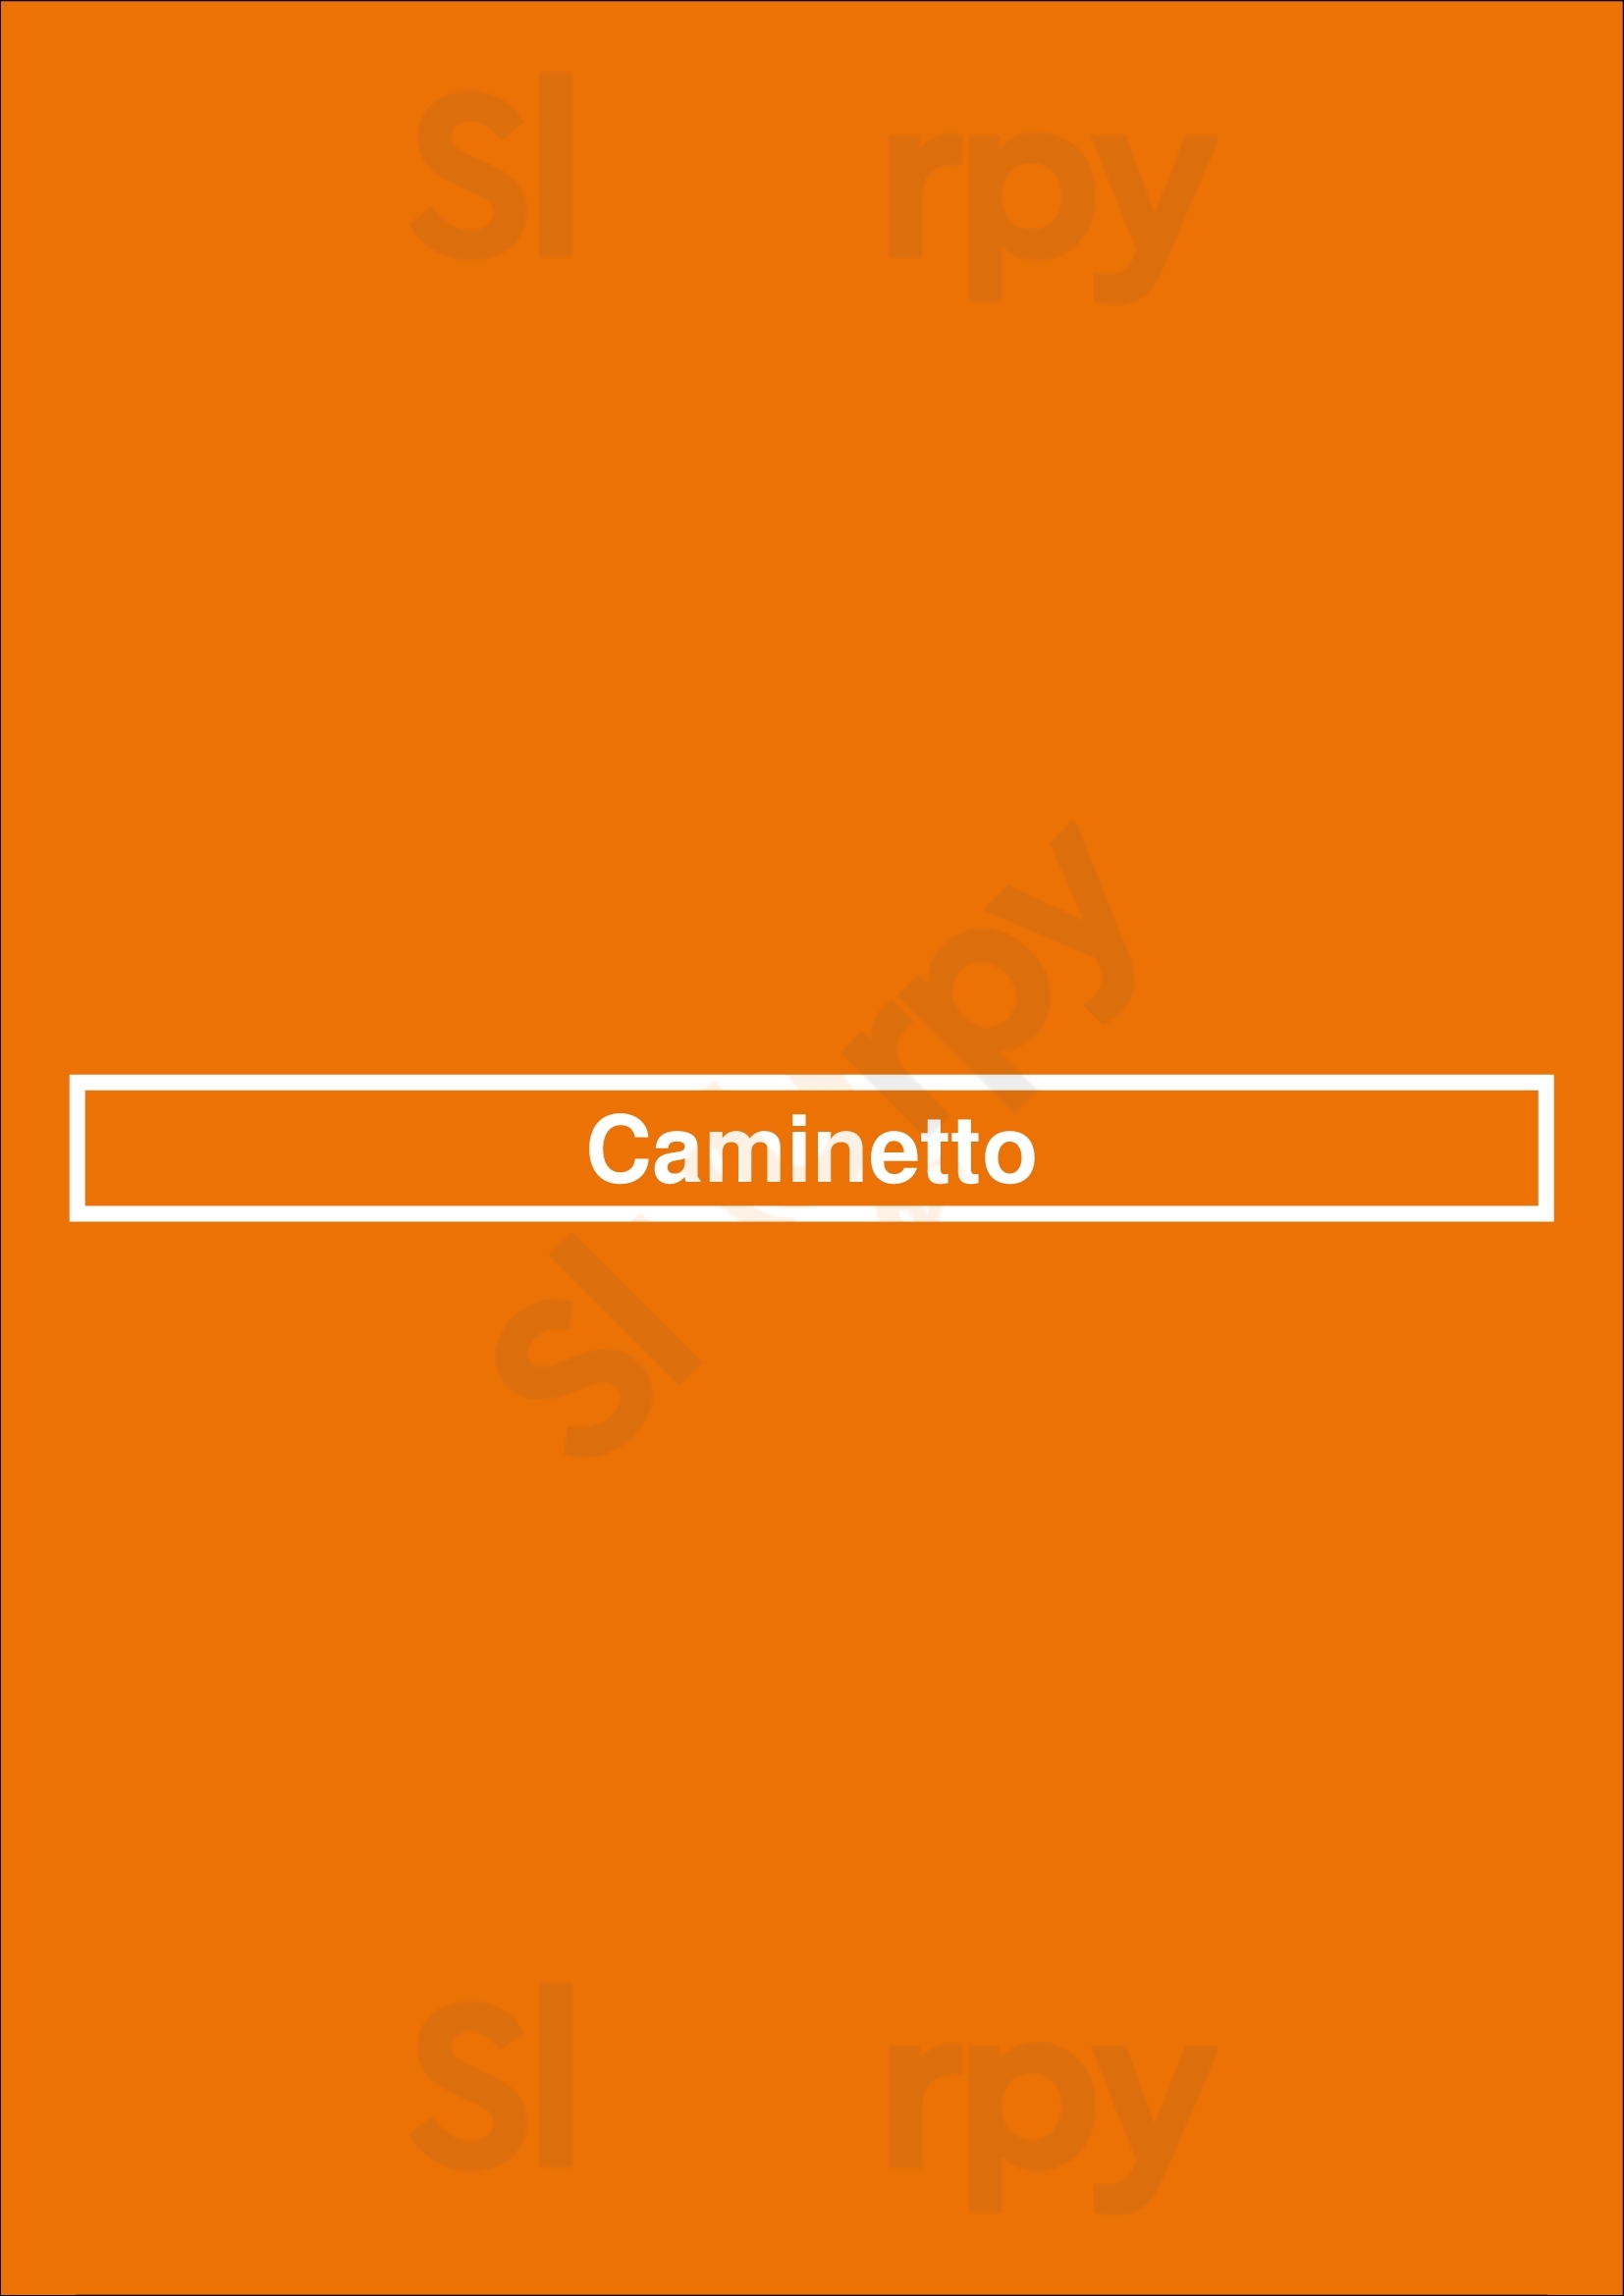 Caminetto Italian Sydney Menu - 1